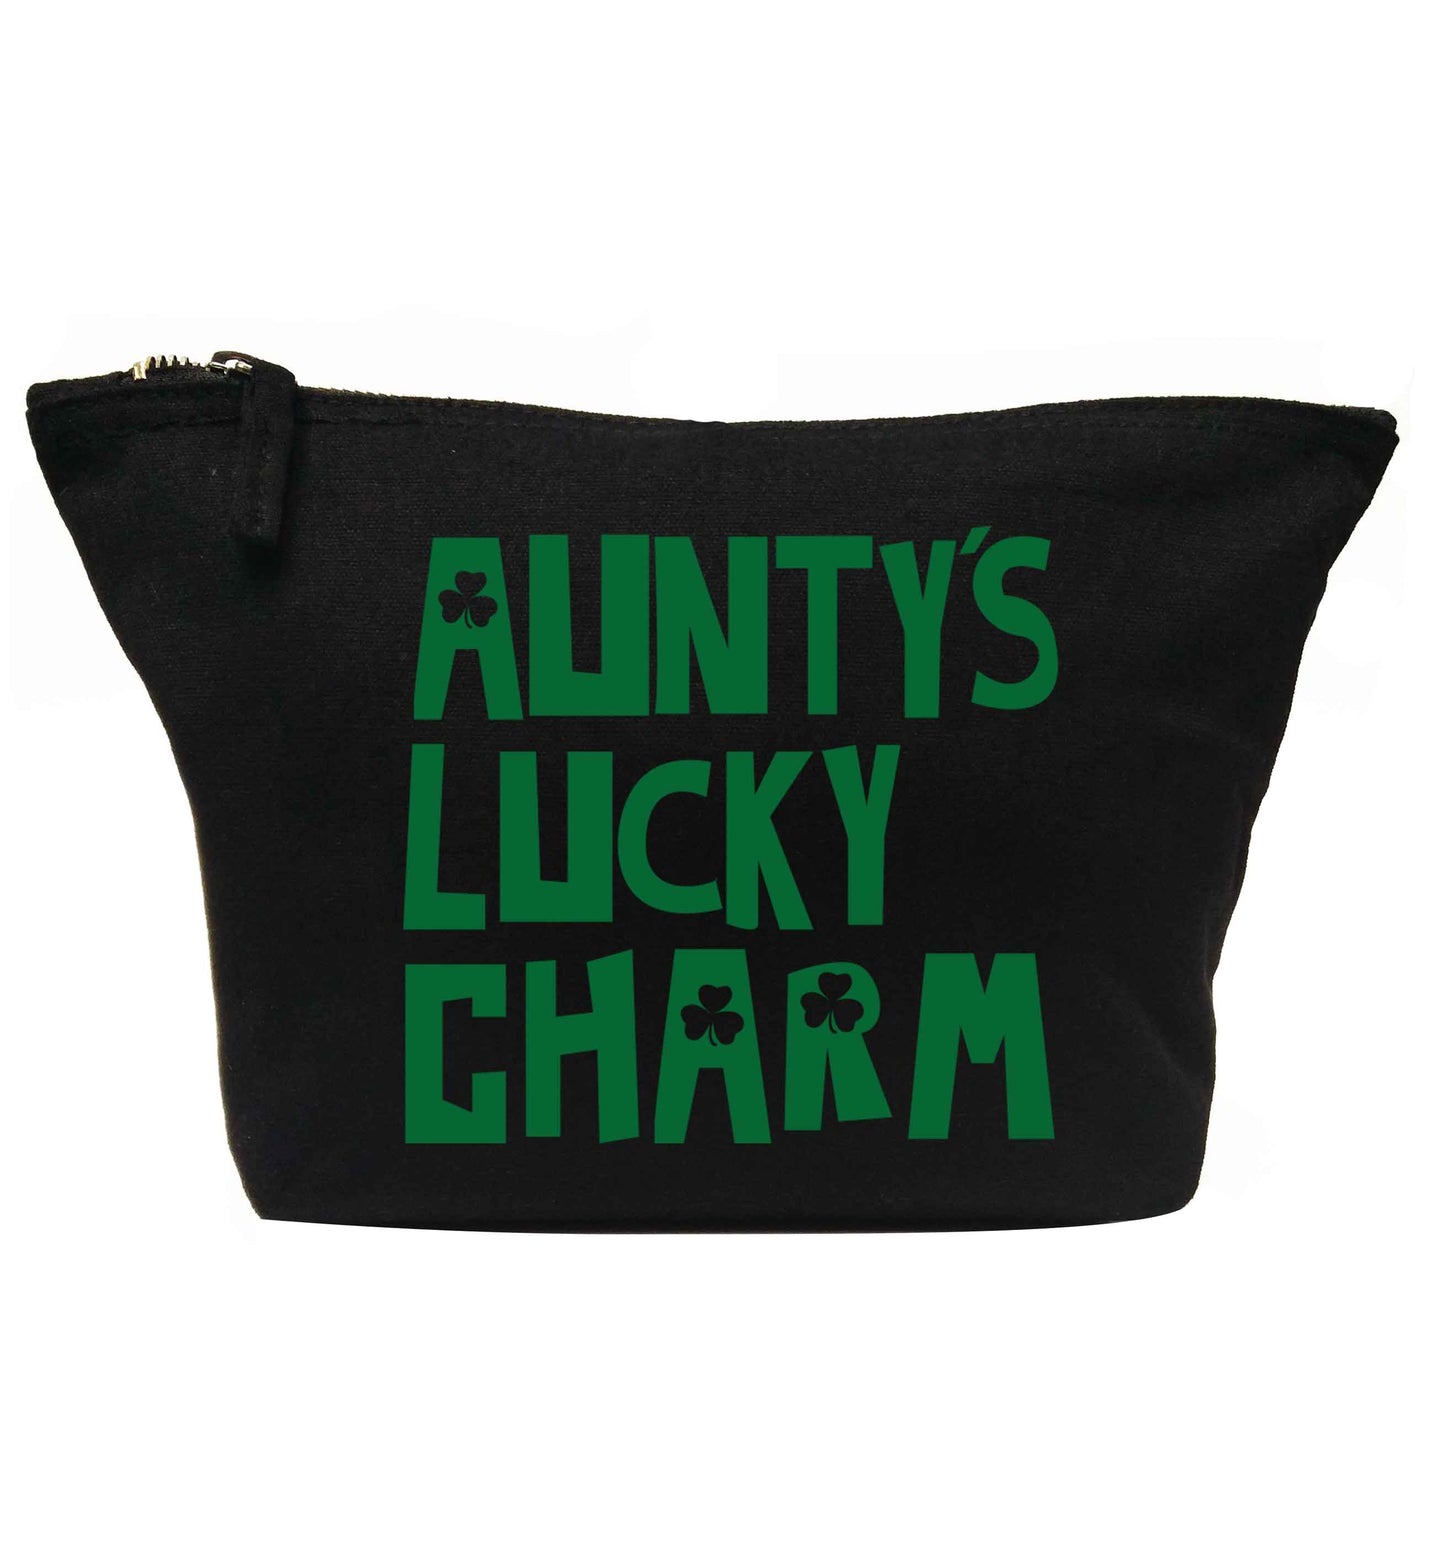 Aunty's lucky charm | Makeup / wash bag